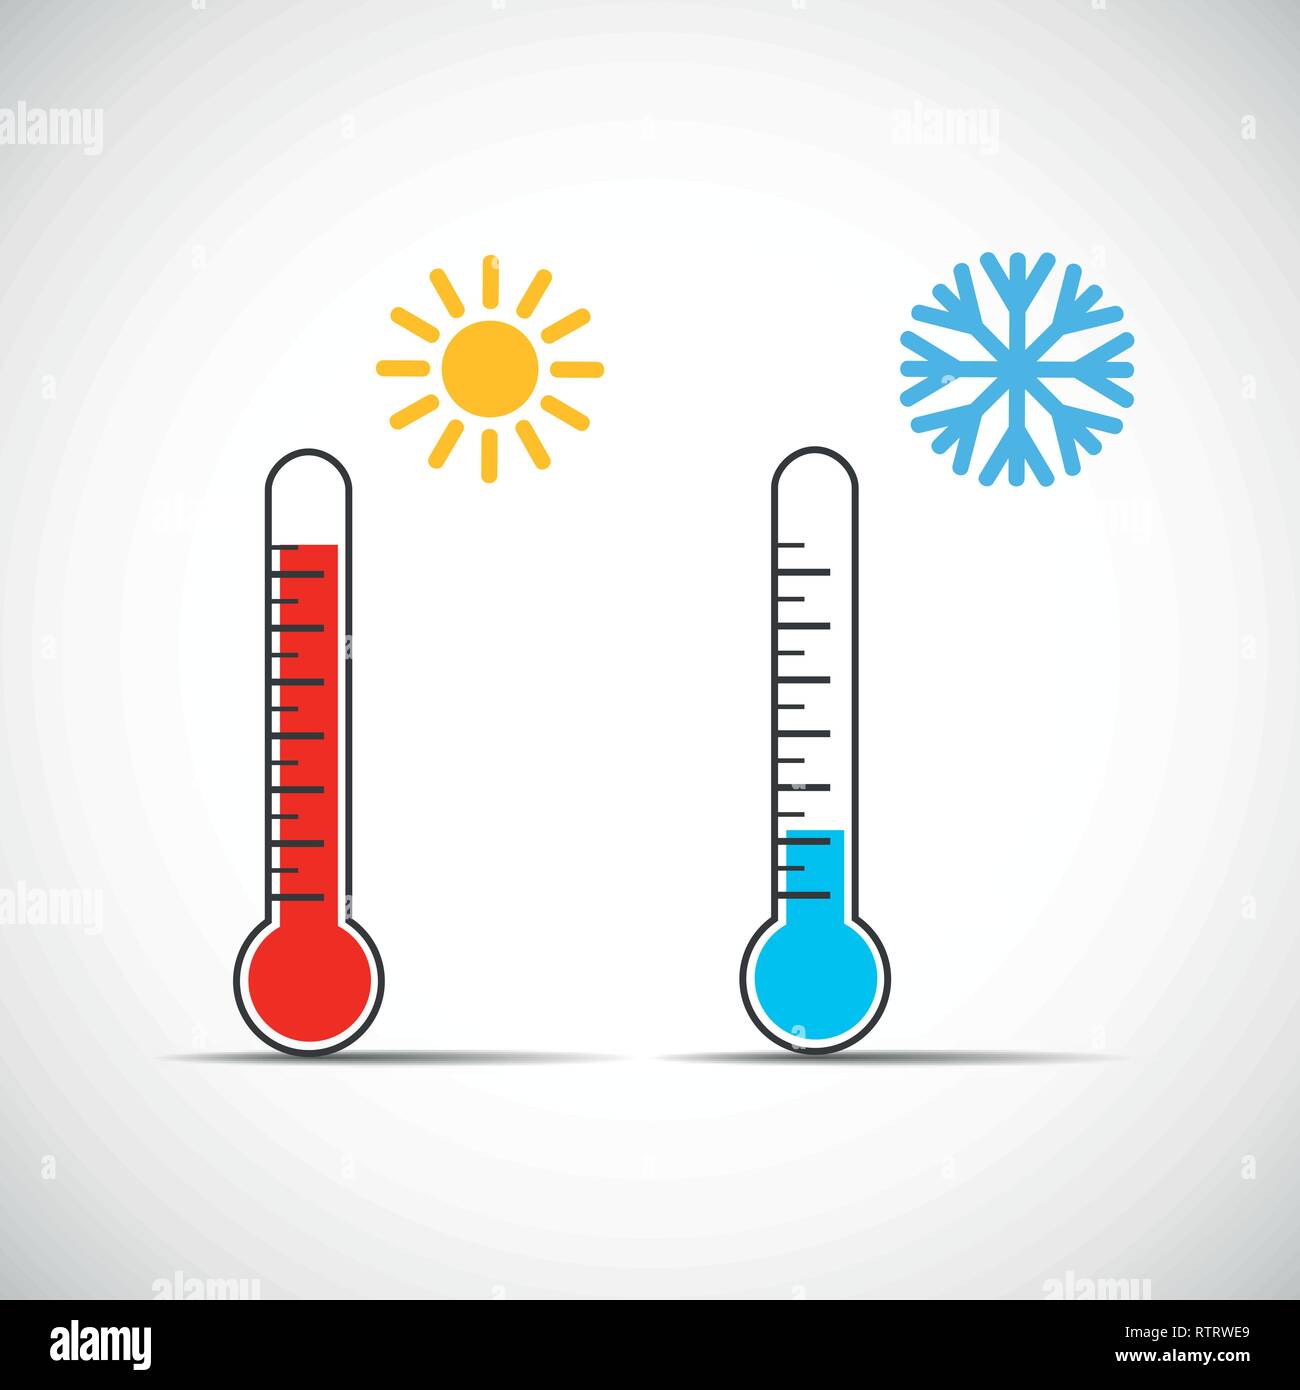 Hitze thermometer Symbol heiß kalt Wetter Vektor-illustration EPS 10  Stock-Vektorgrafik - Alamy